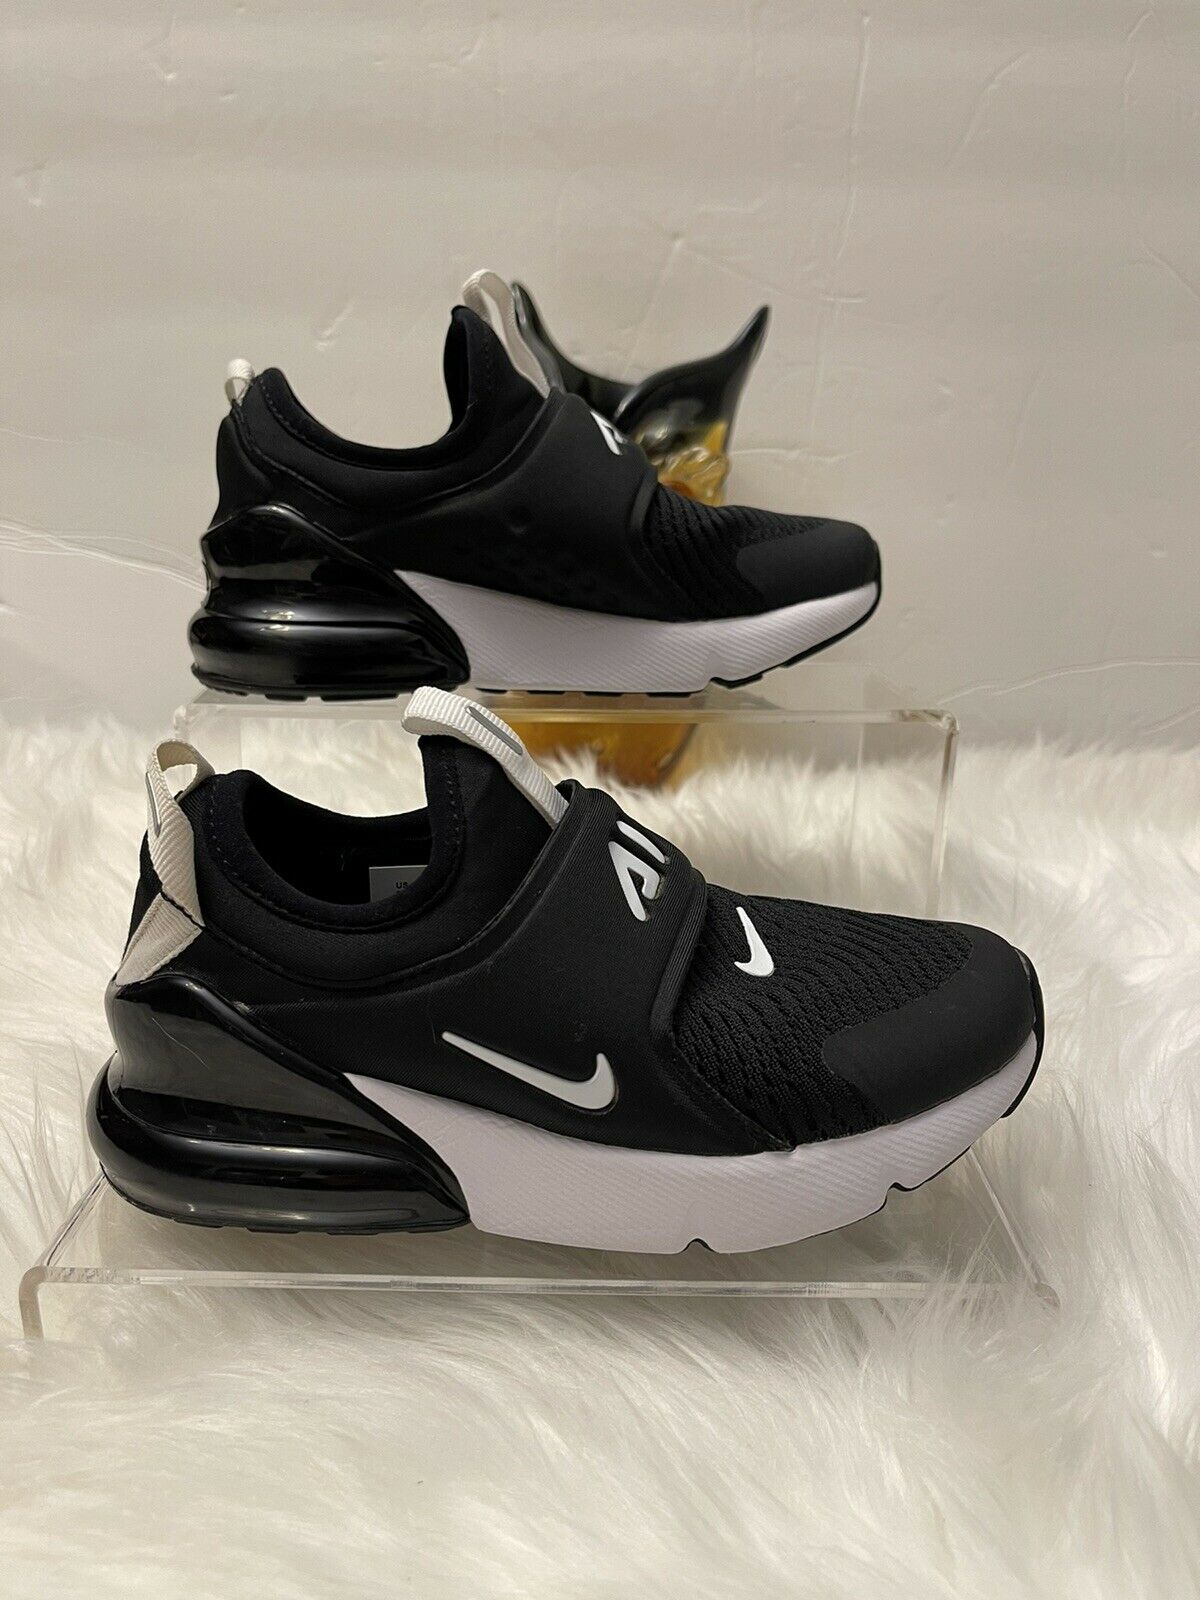 Little Kids' Nike Air Max 270 Extreme Casual Shoes Black/White CI1107 001 Sz 12c